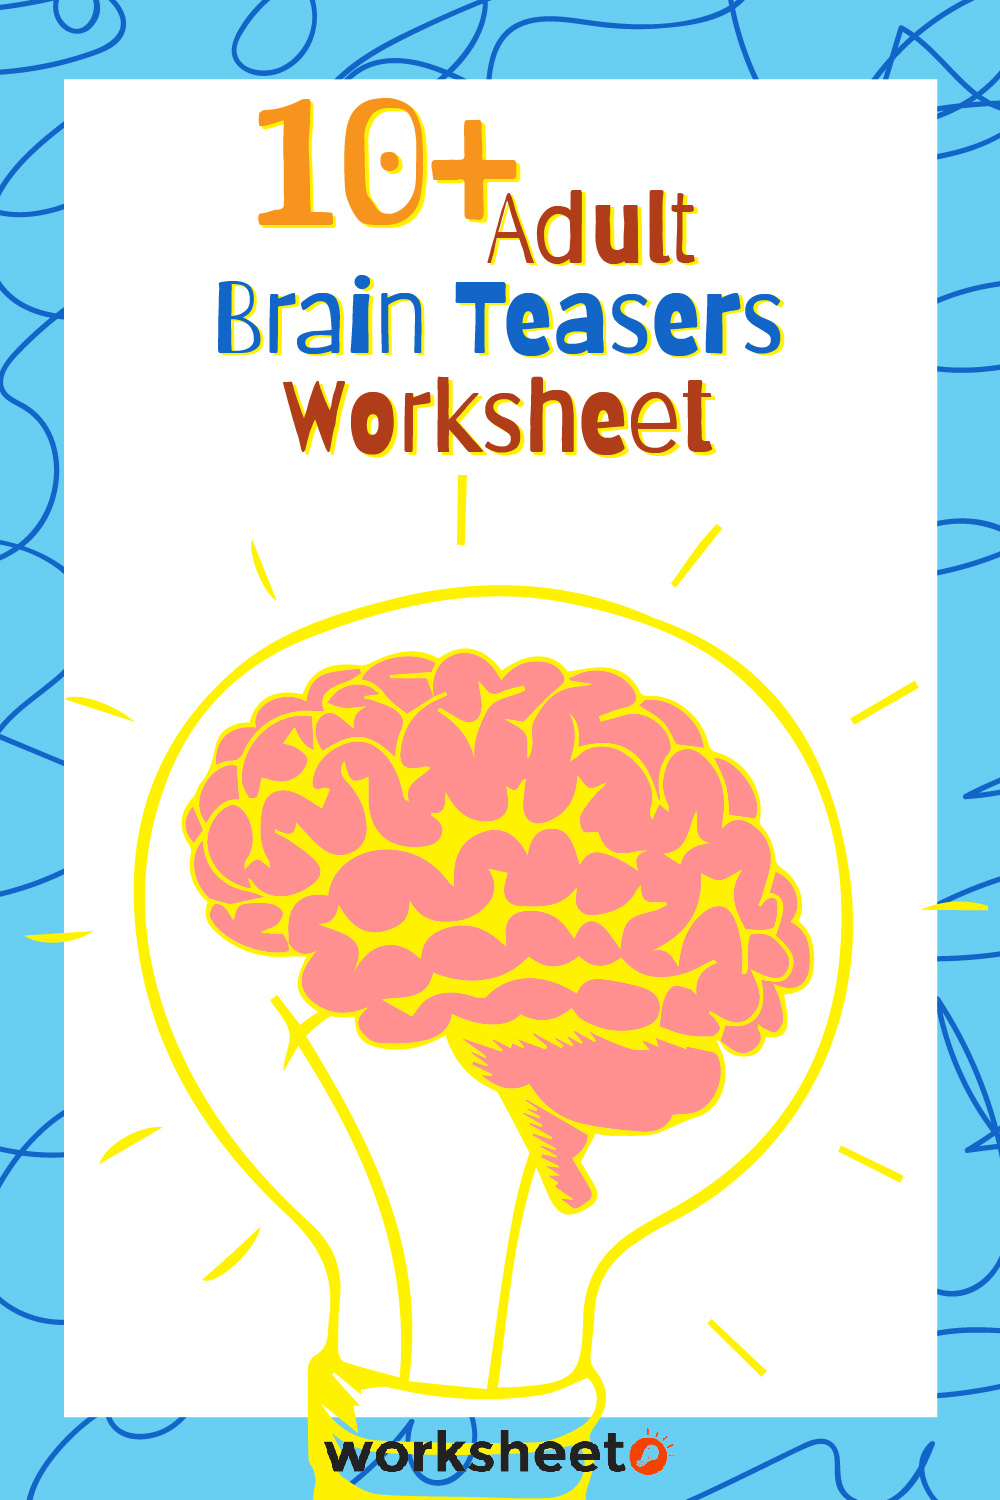 17 Images of Adult Brain Teasers Worksheet